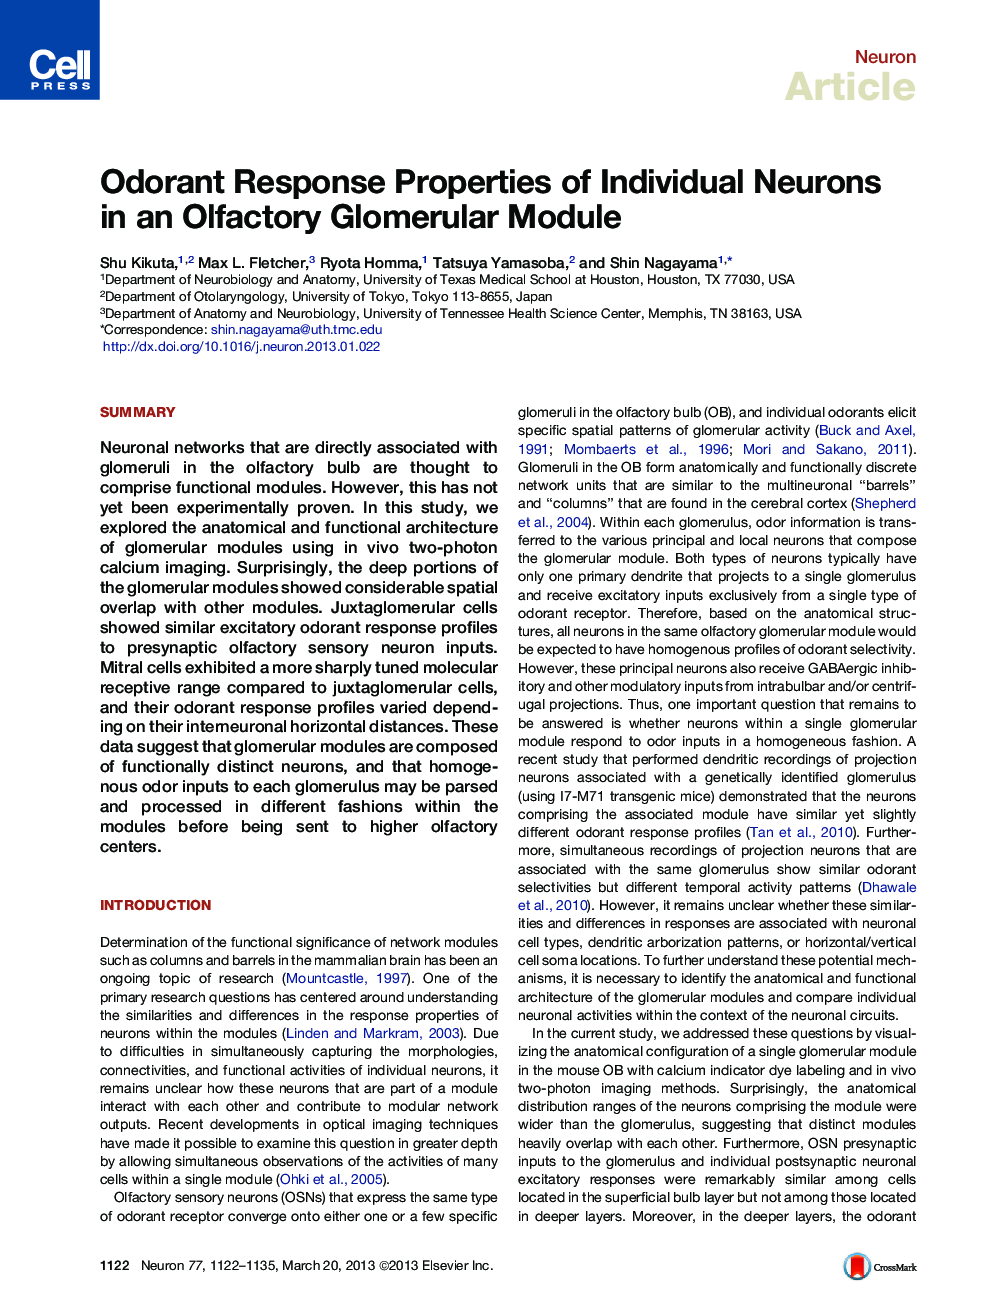 Odorant Response Properties of Individual Neurons in an Olfactory Glomerular Module